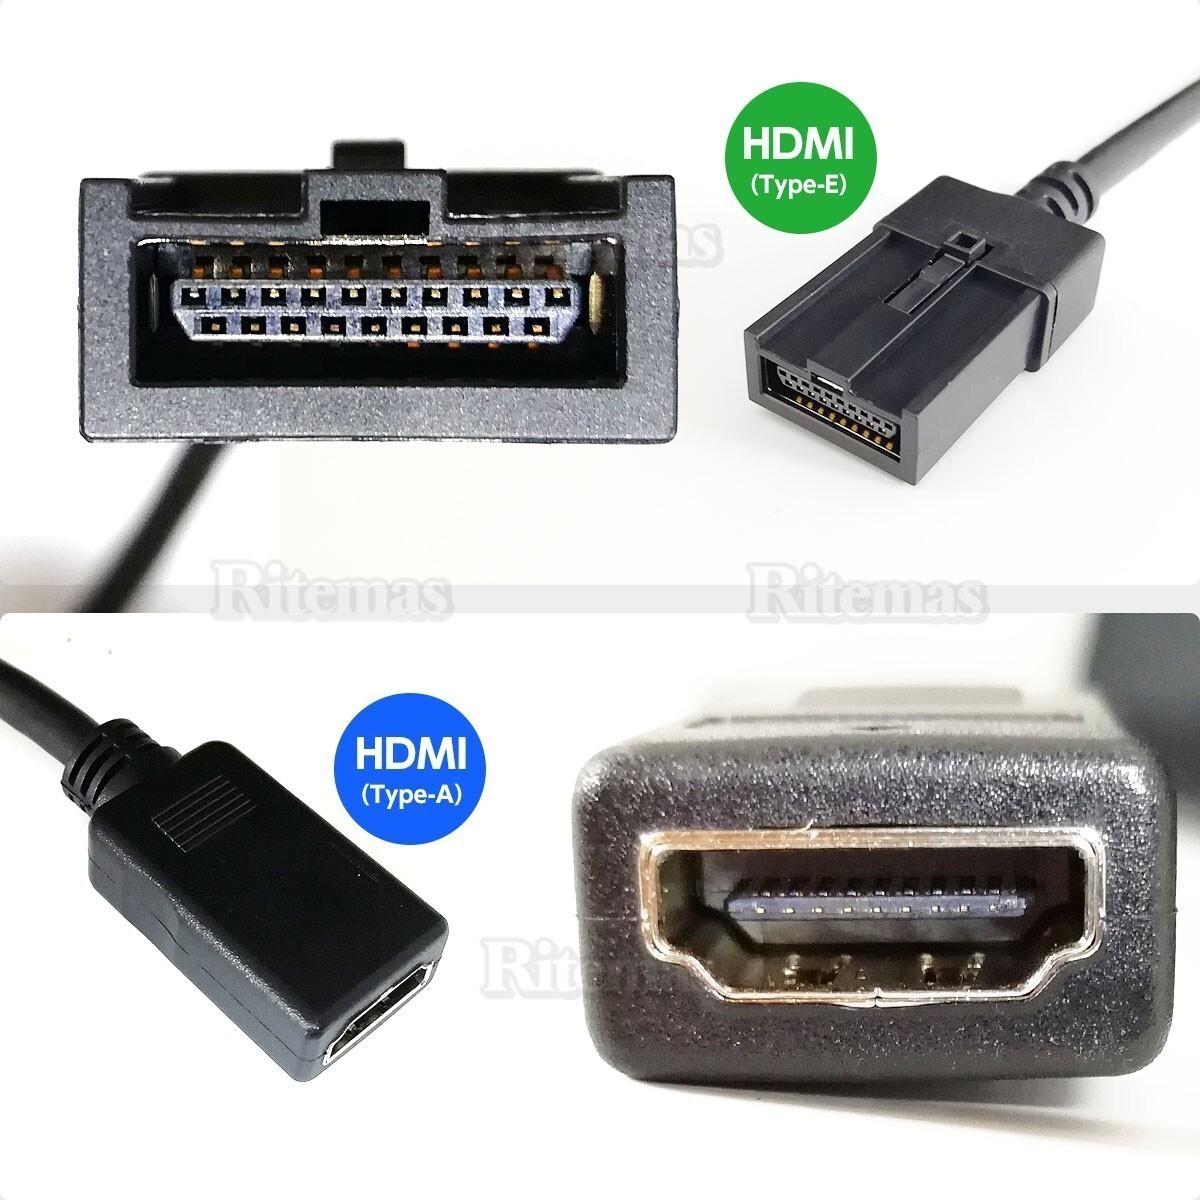 HDMI 変換 ケーブル カーナビ ホンダ 2016年モデル VXM-165VFNi タイプE タイプA 接続 配線 コード アダプター 車 ナビ ハーネス 外部入力の画像3